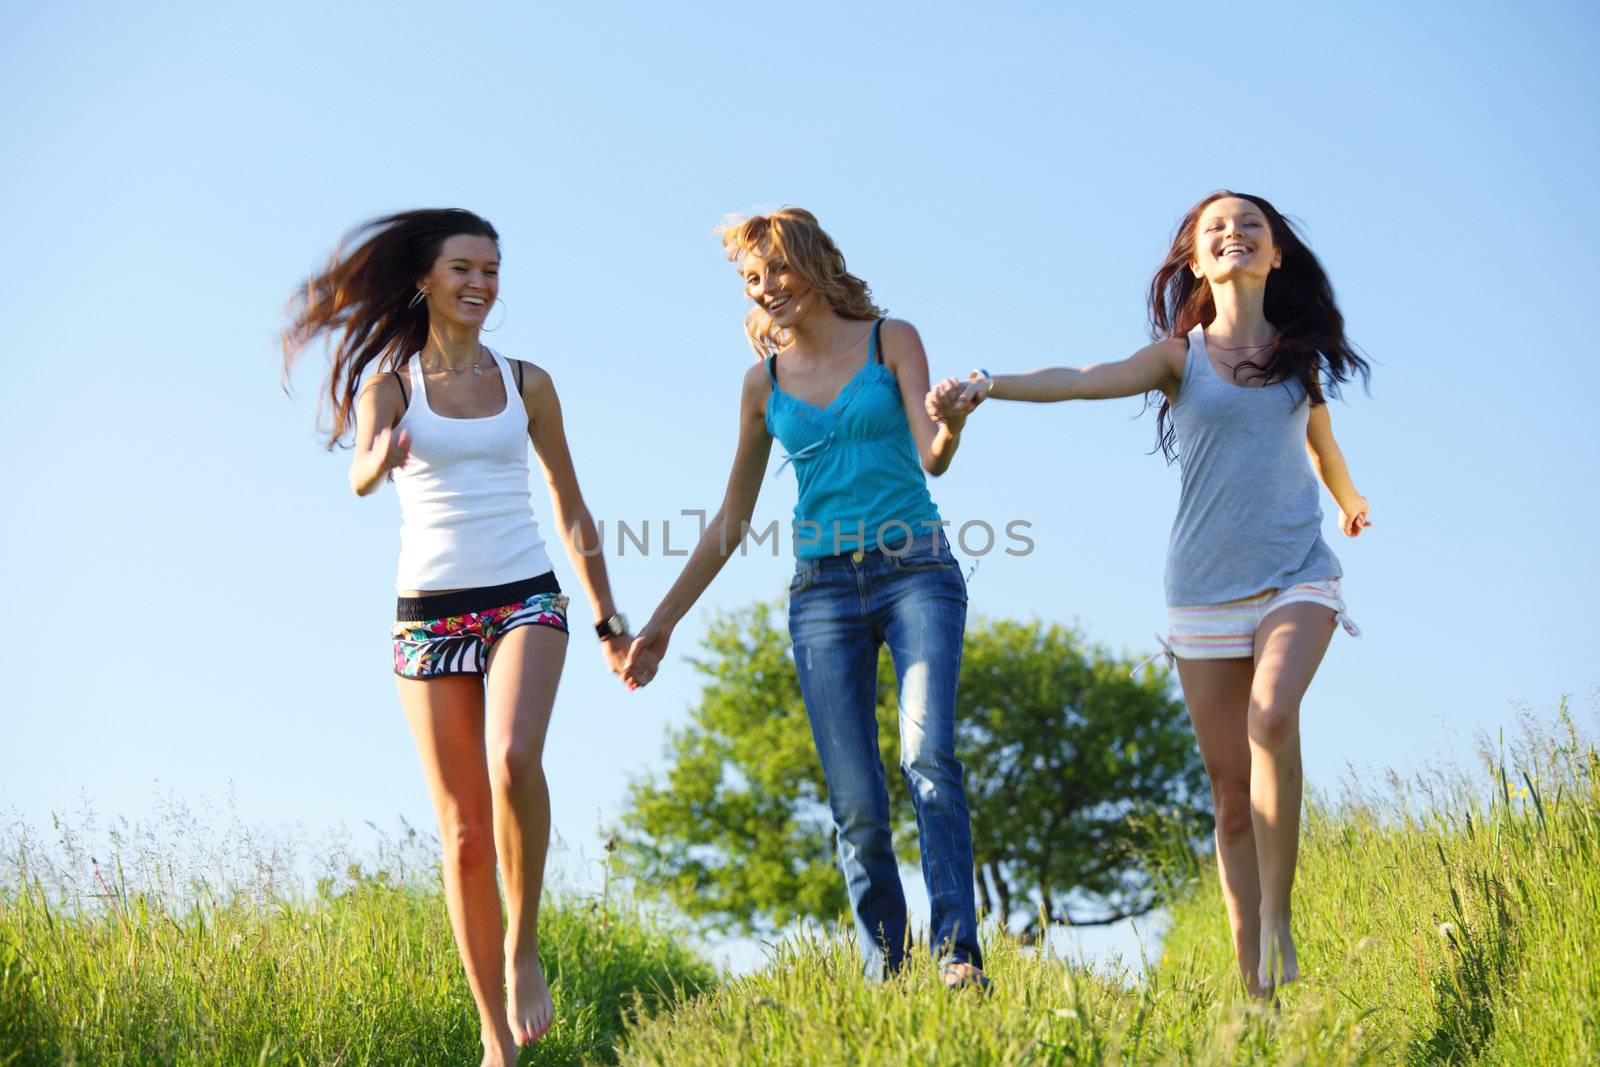 women fun on grass field